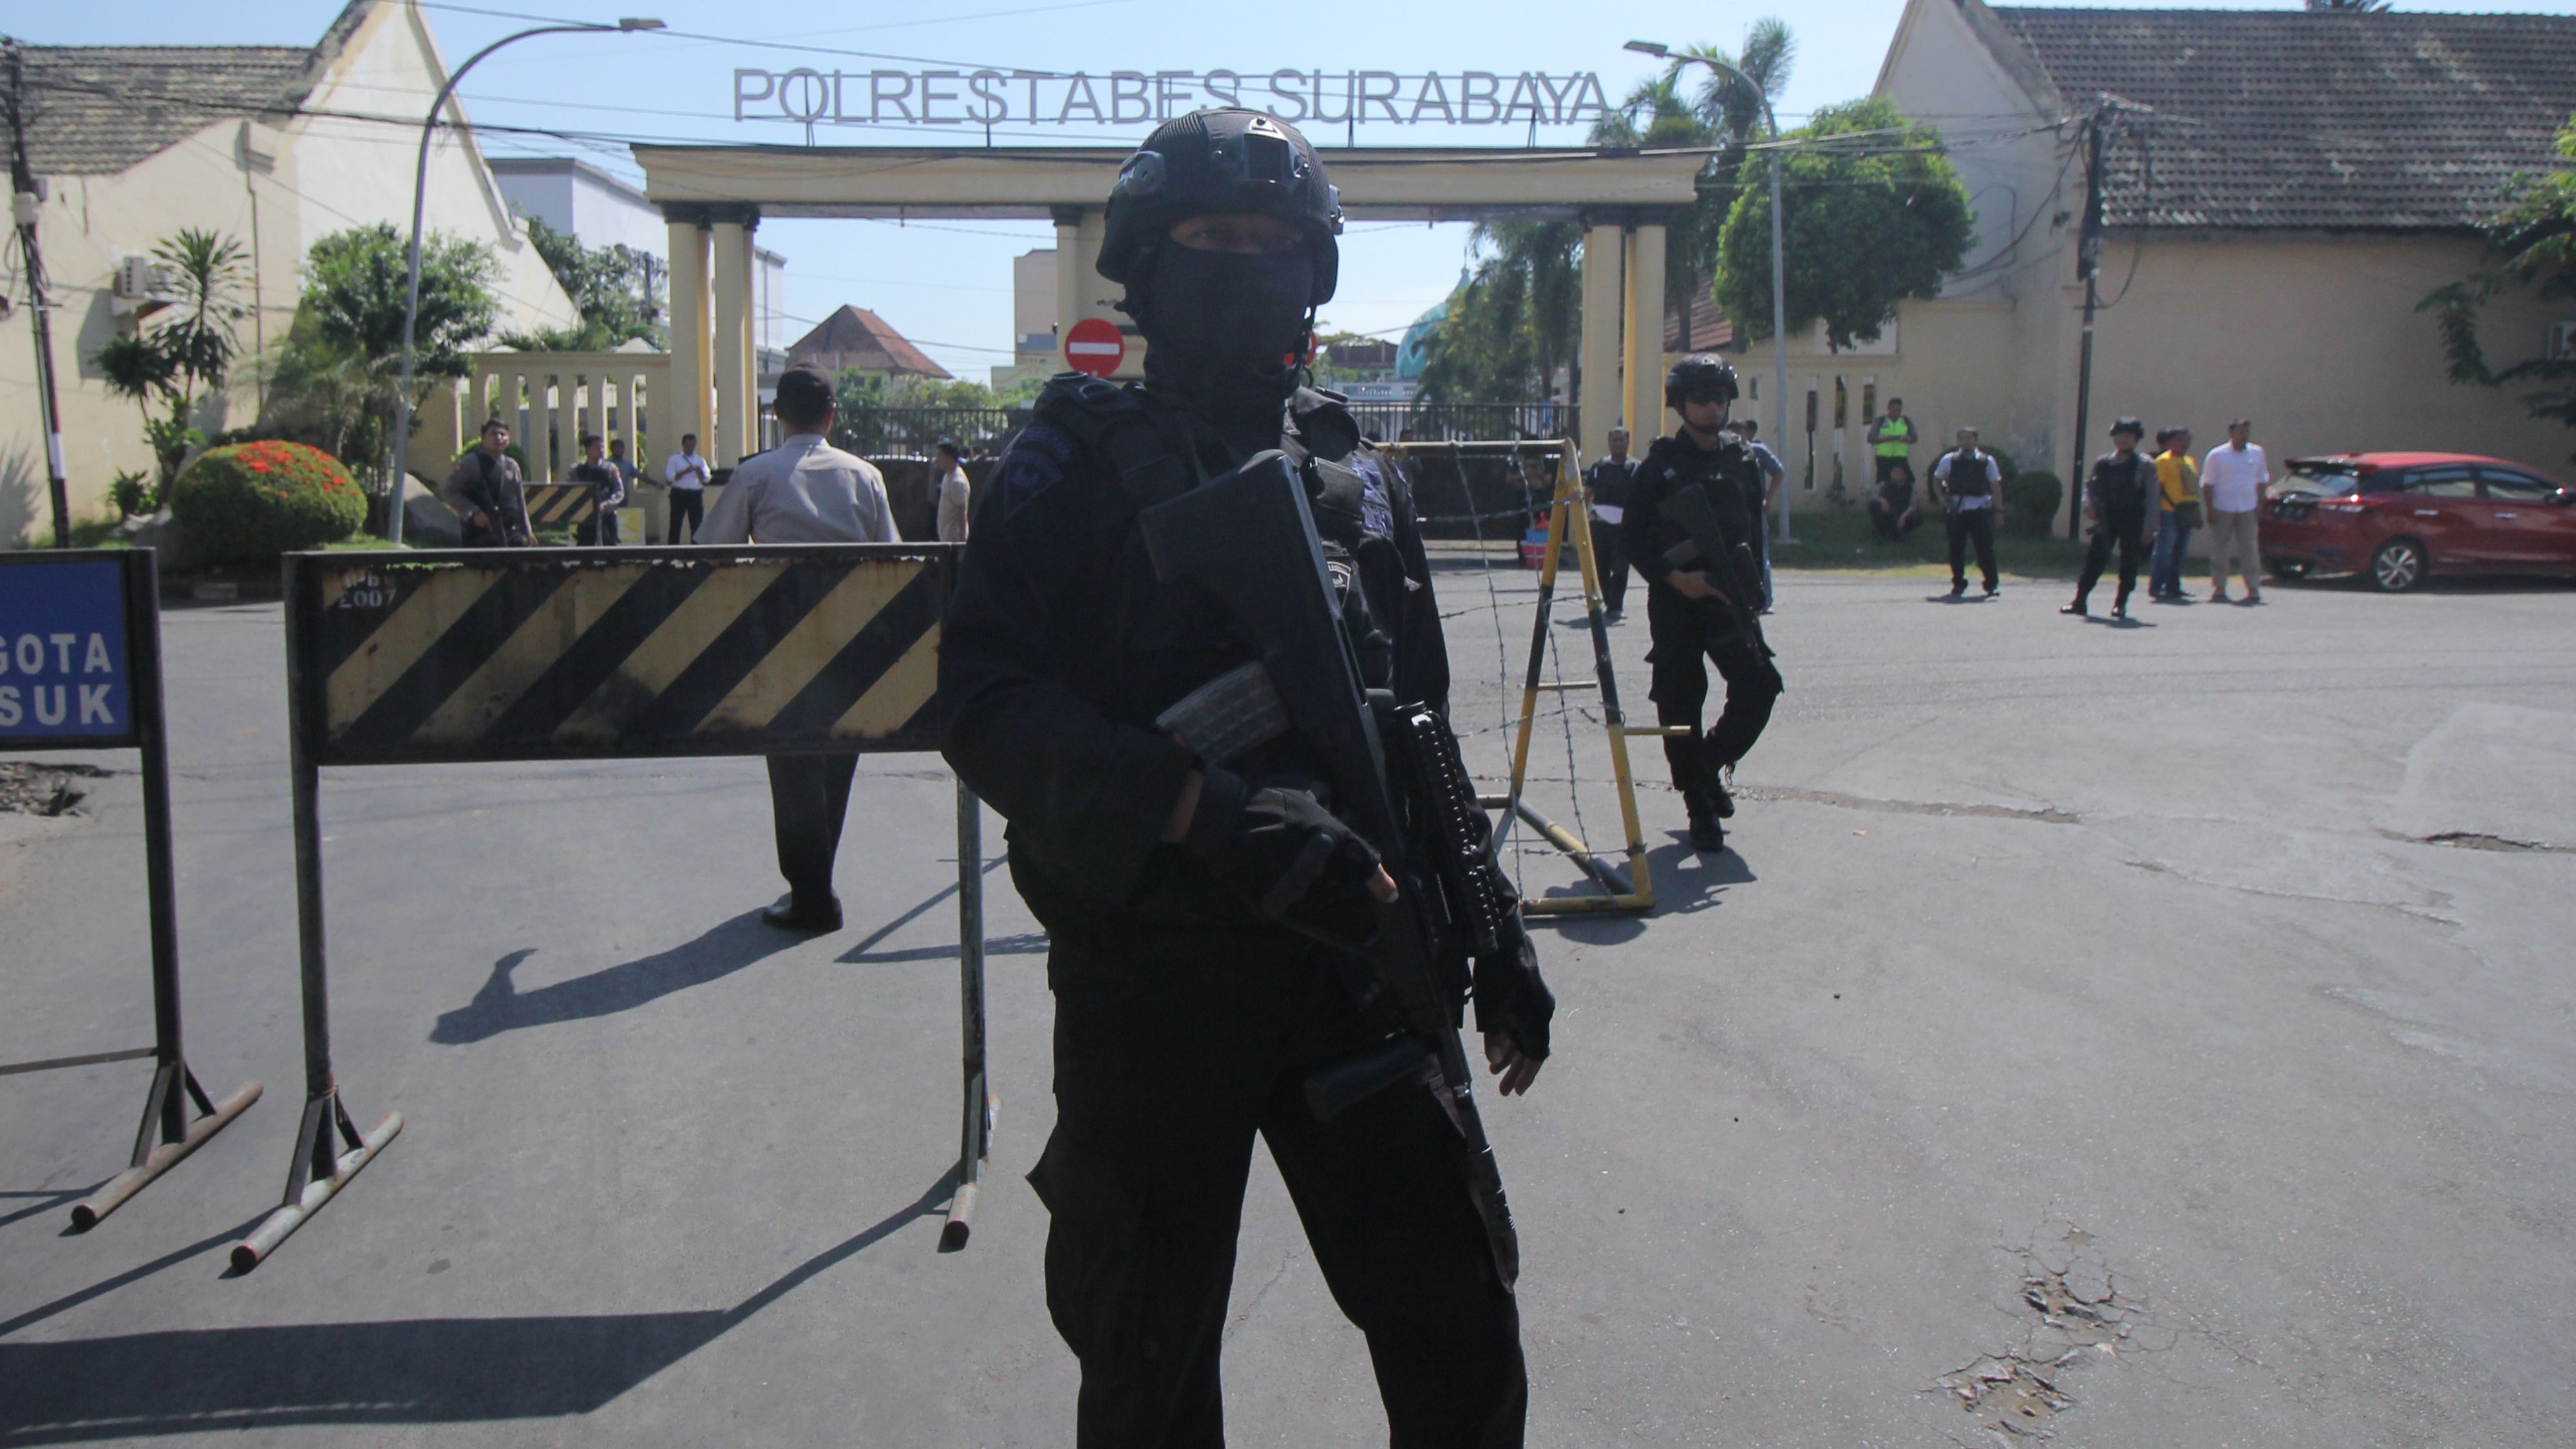 Serangan bom Surabaya dan ancaman Presiden Joko Widodo tentang Perppu BBC News Indonesia